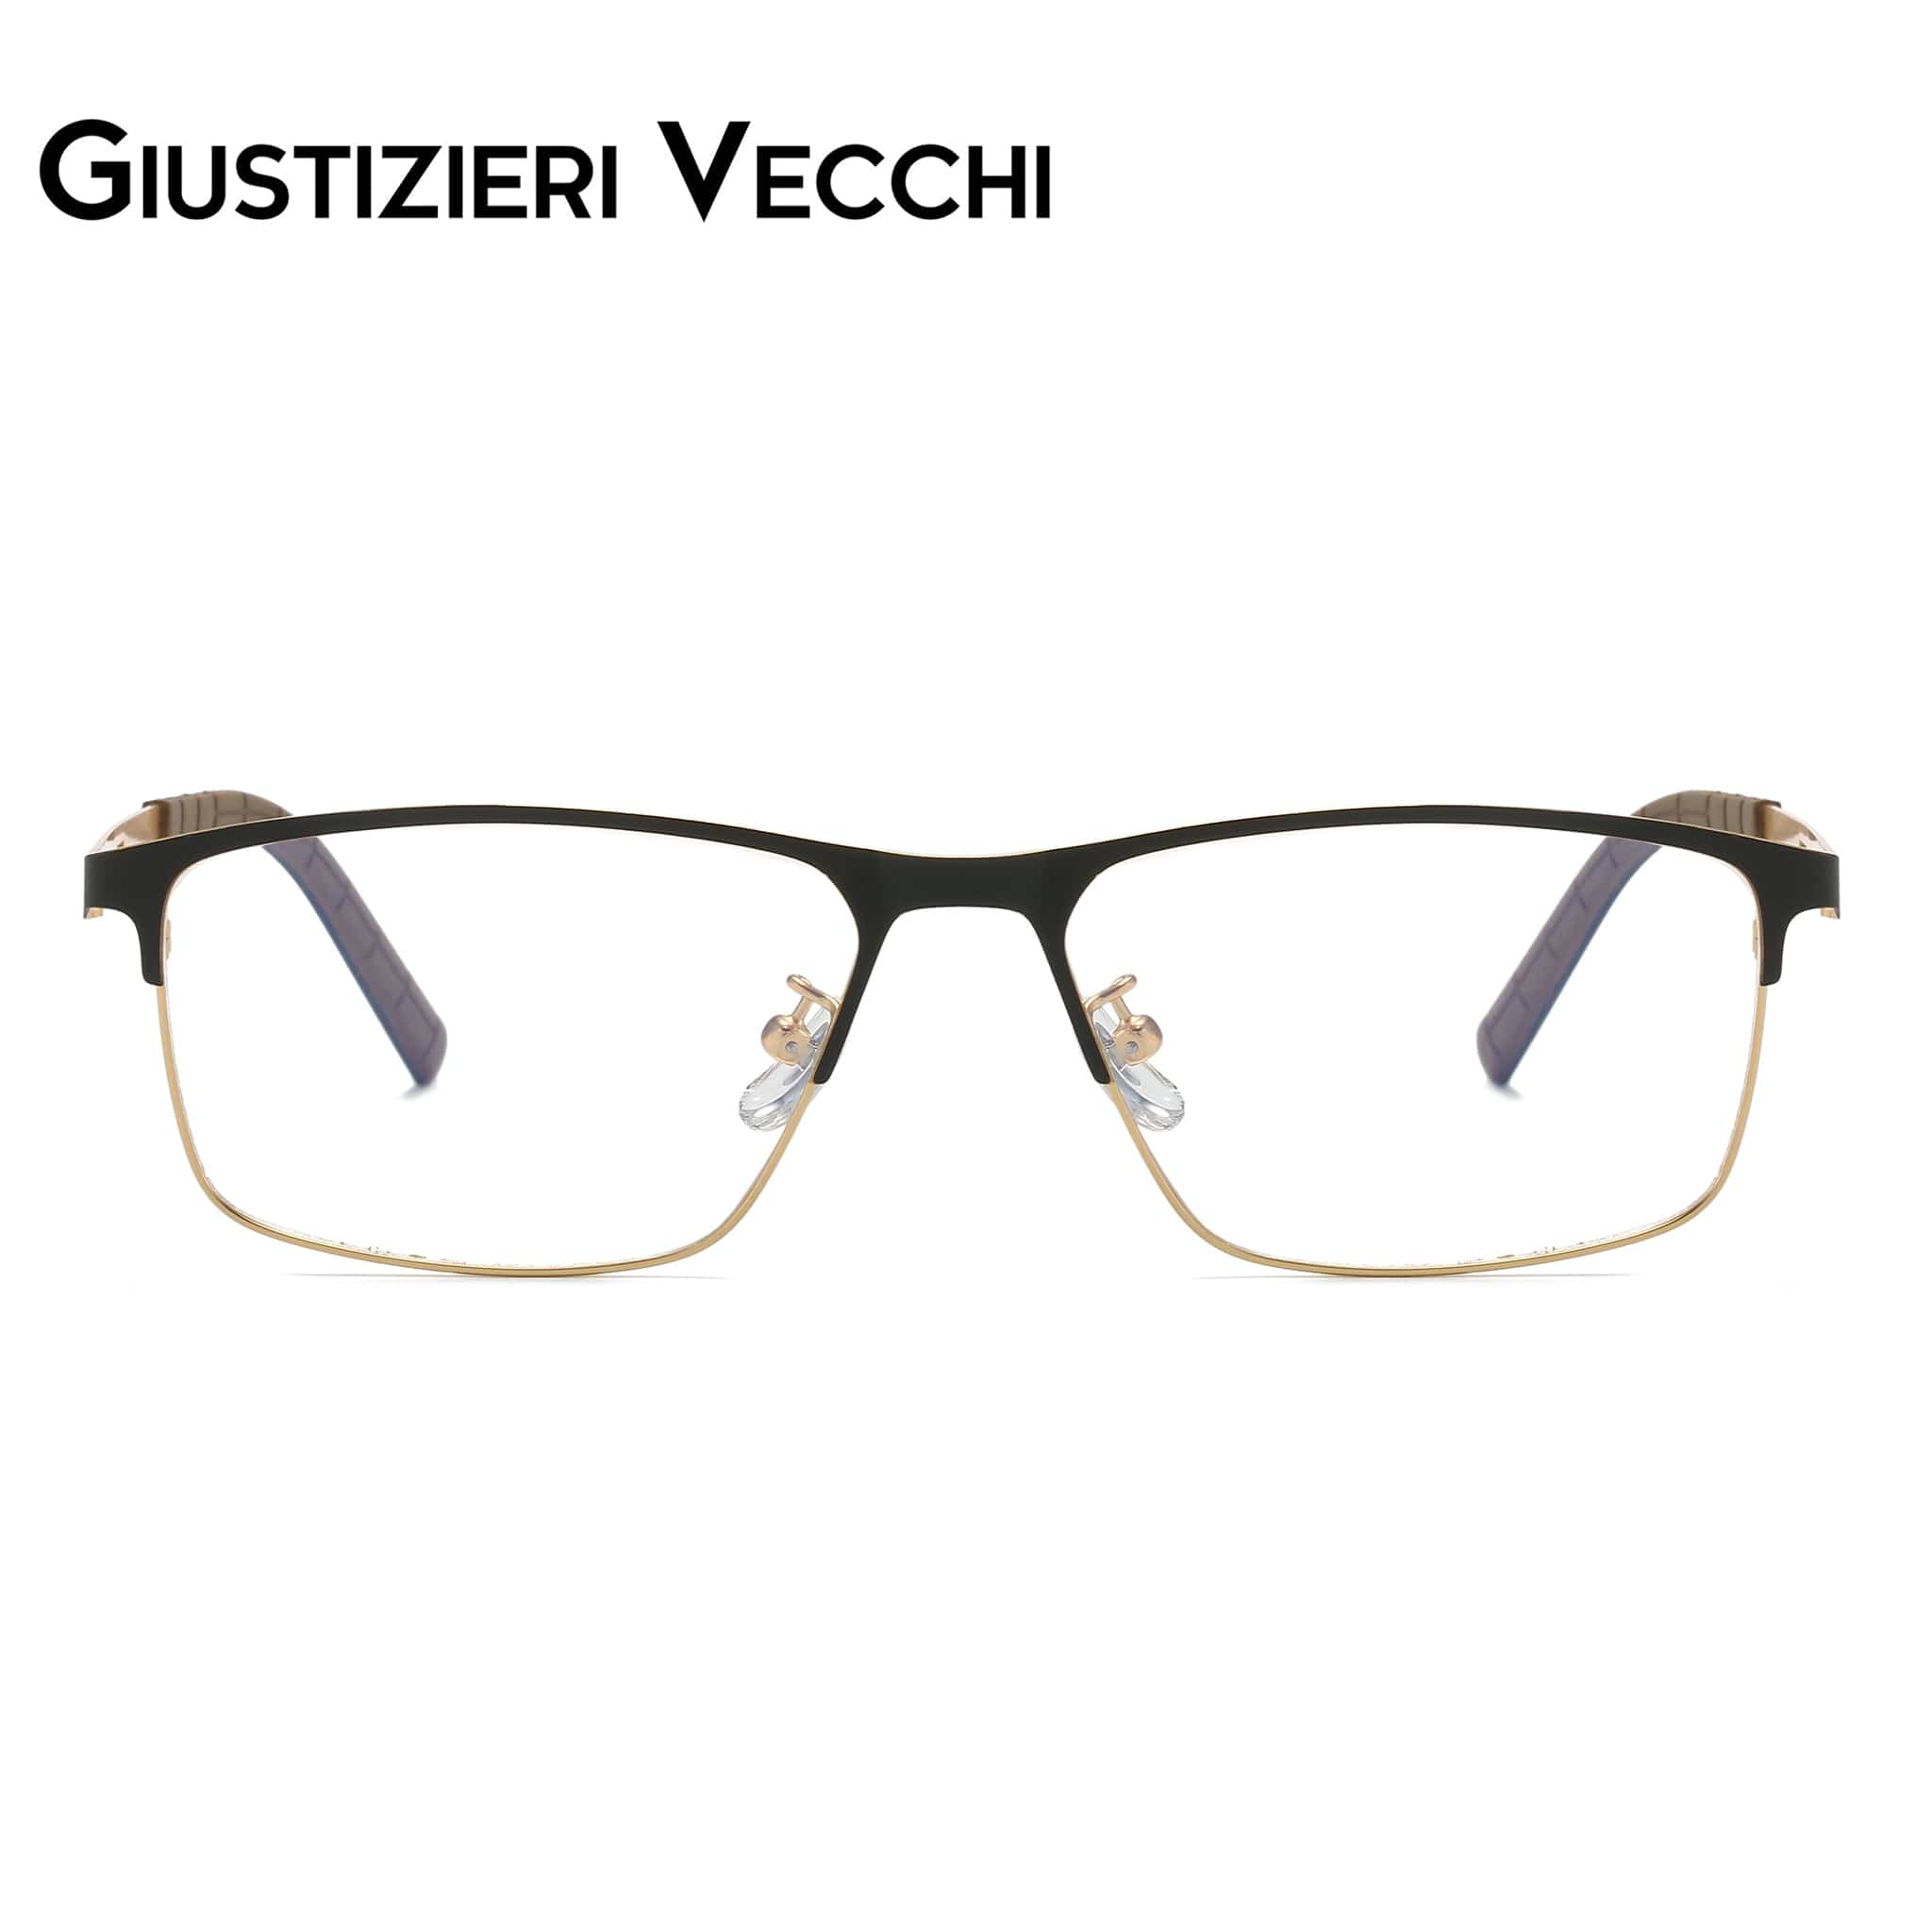 GIUSTIZIERI VECCHI Eyeglasses Large / Black with Brown Sunburst Duo